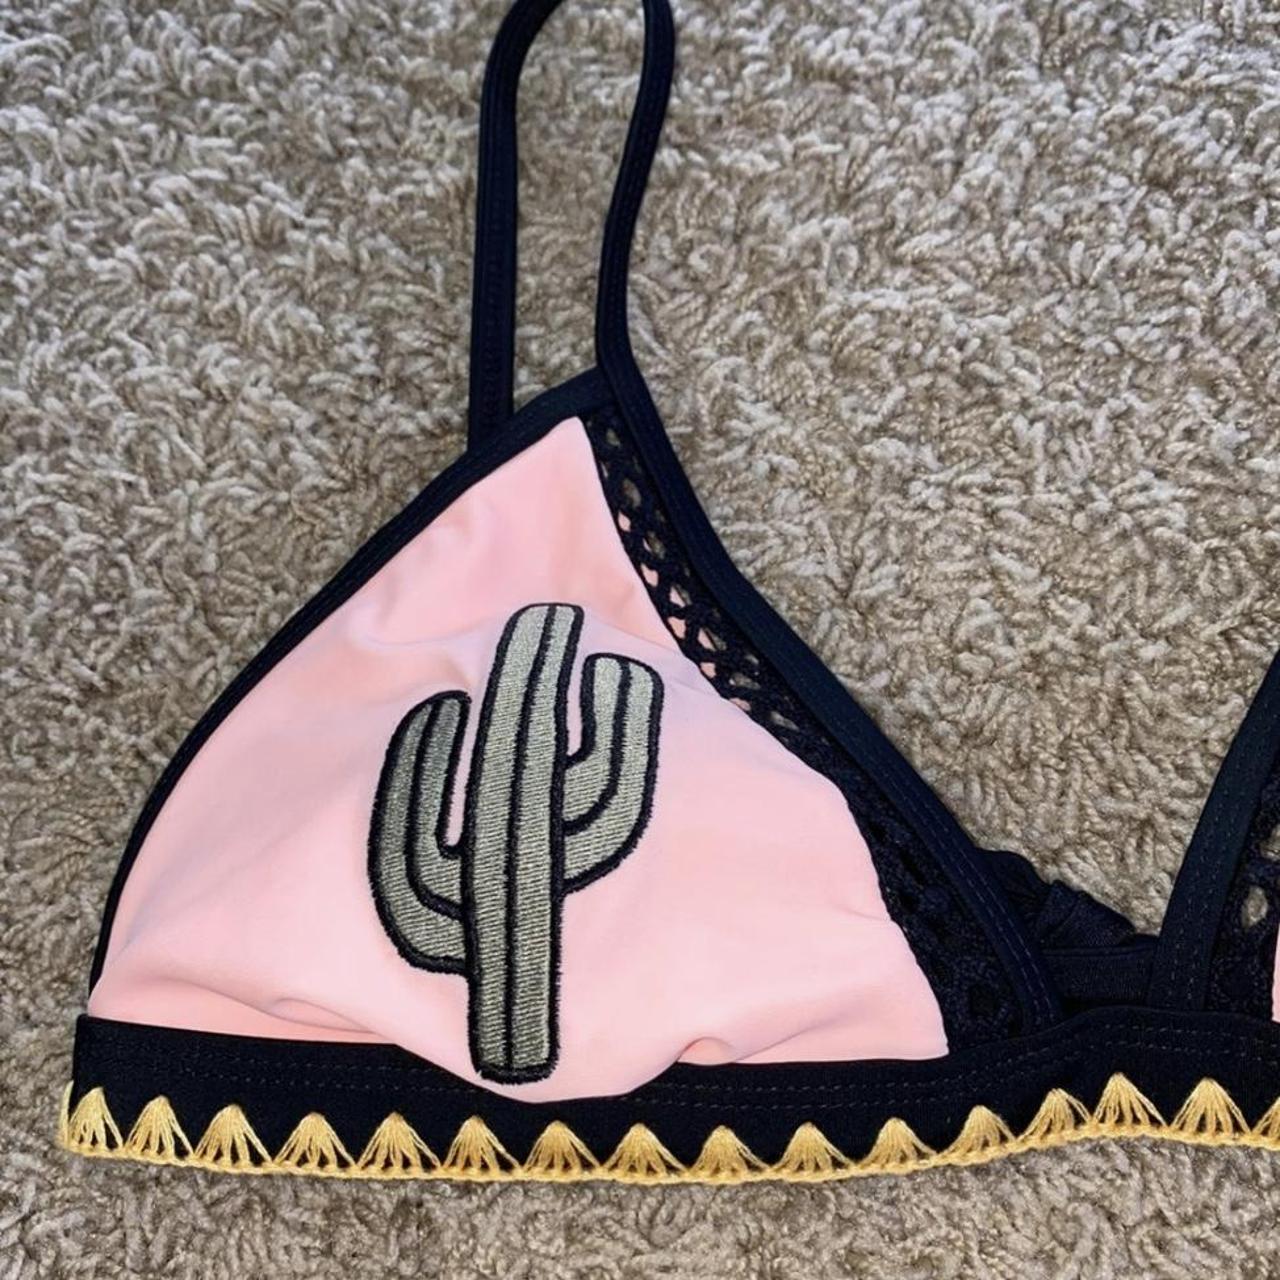 Product Image 2 - Women's Cactus Swimsuit bikini
Top sz